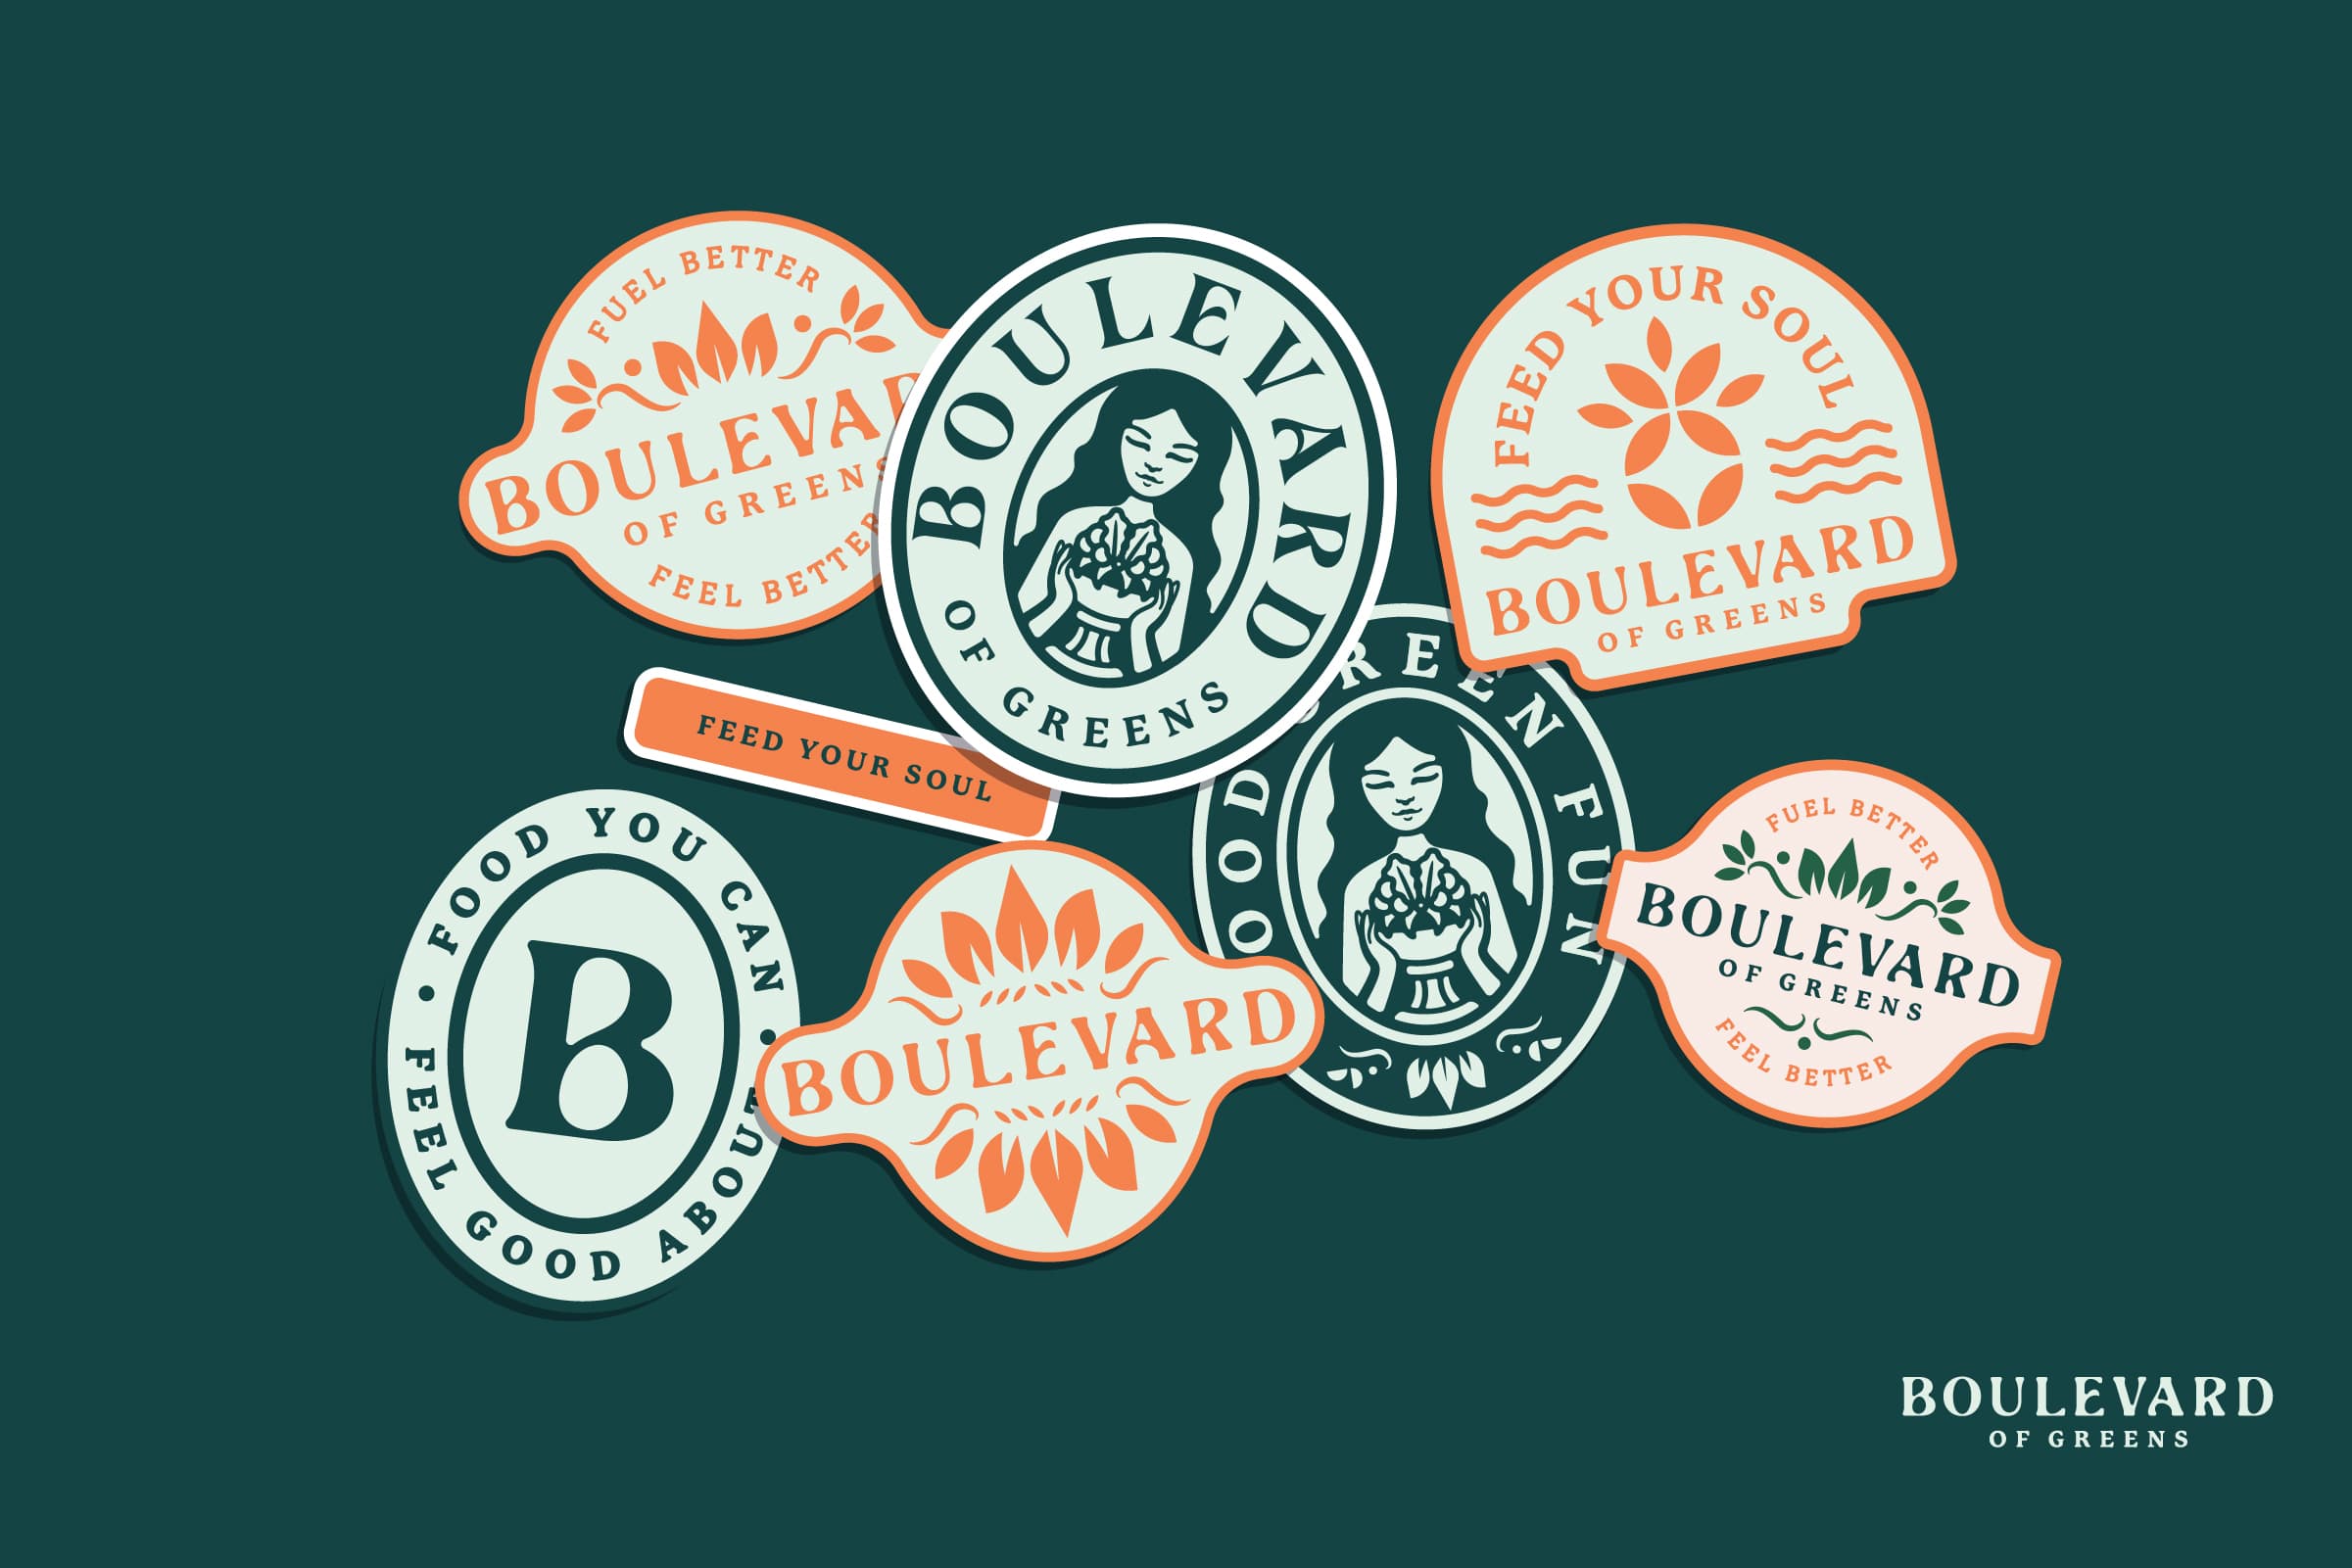 vegan restaurant boulevard of greens sticker design